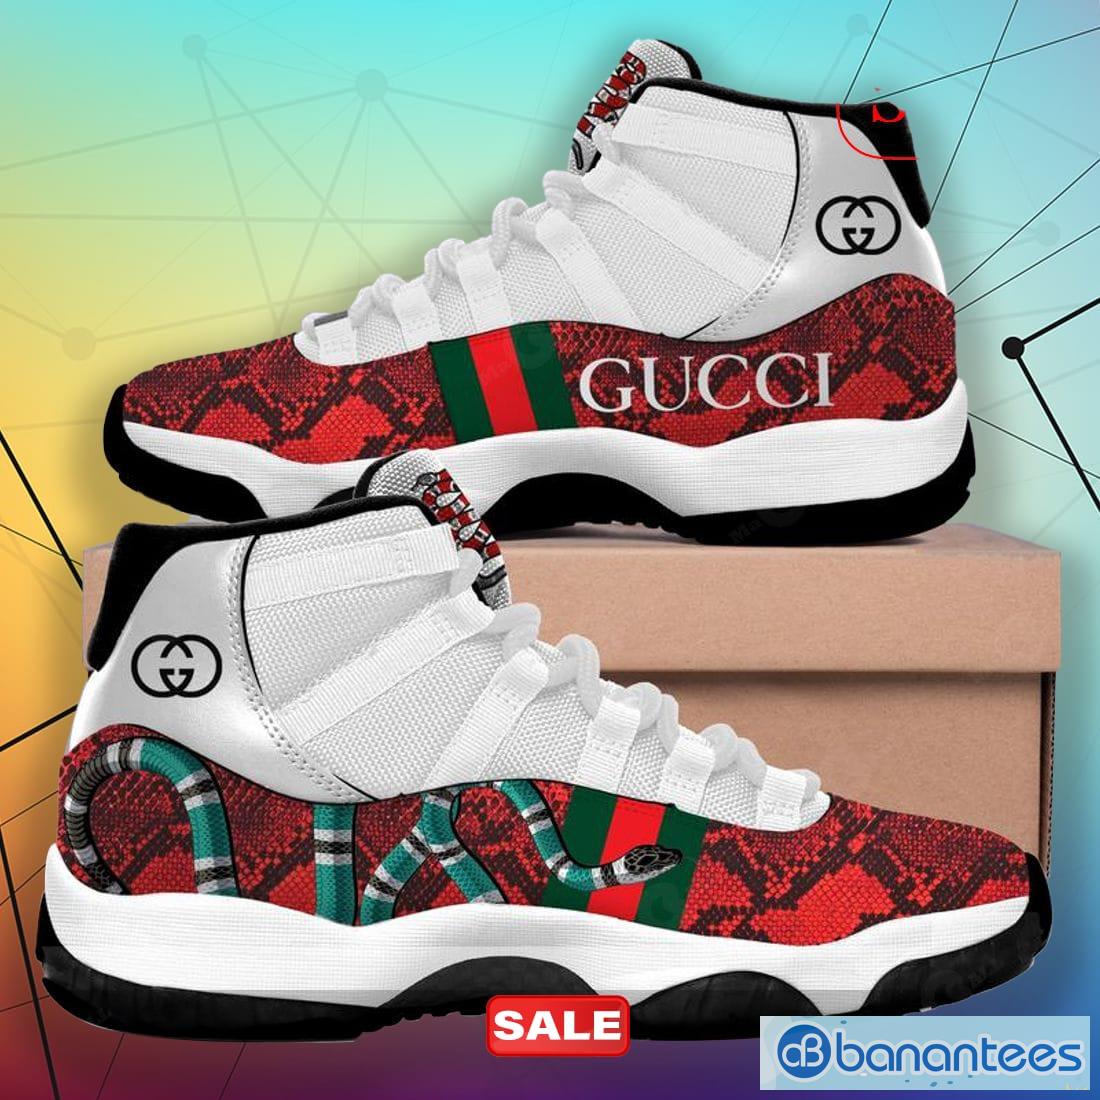 Brand Snake Air Jordan 11 Gucci Gifts For Men Shoes - Banantees